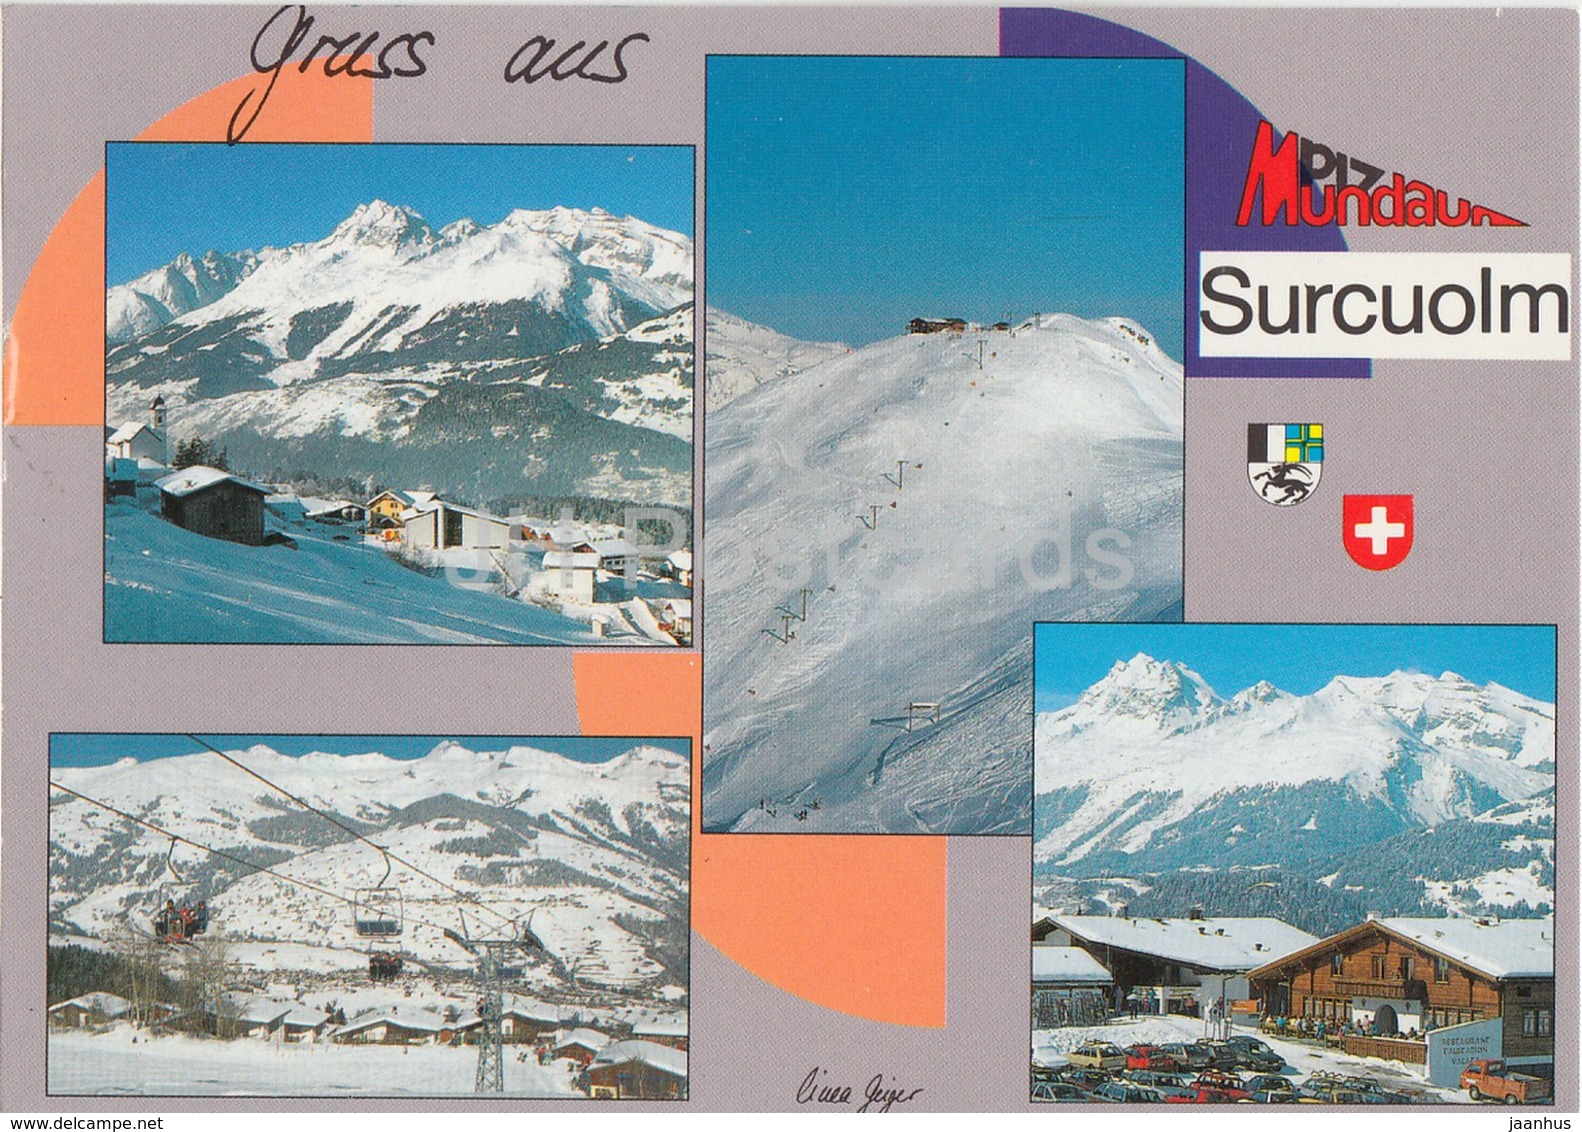 Gruss Aus Piz Mundaun - Surcuolm - Skigebiet - Ski Resort - Skiing - Switzerland - Used - Mundaun